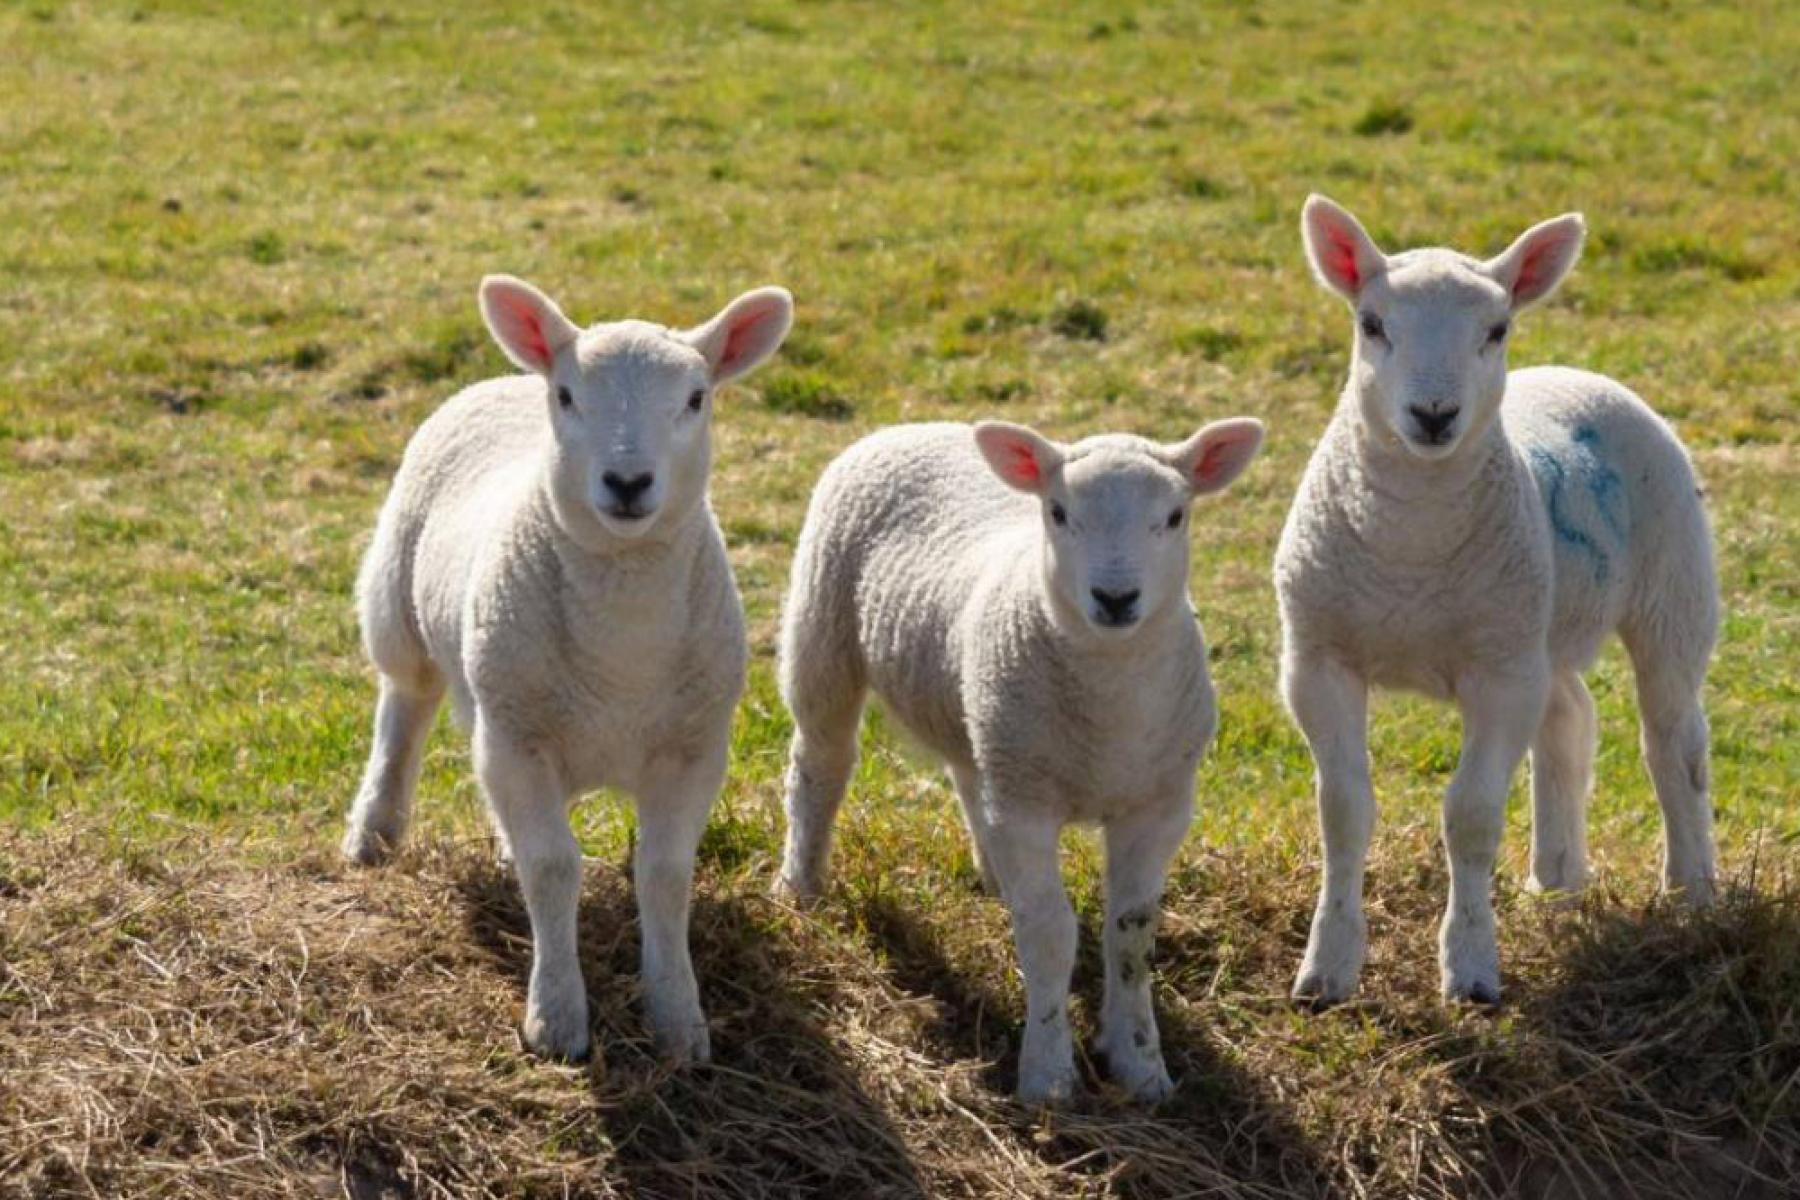 Three lambs in a spring field